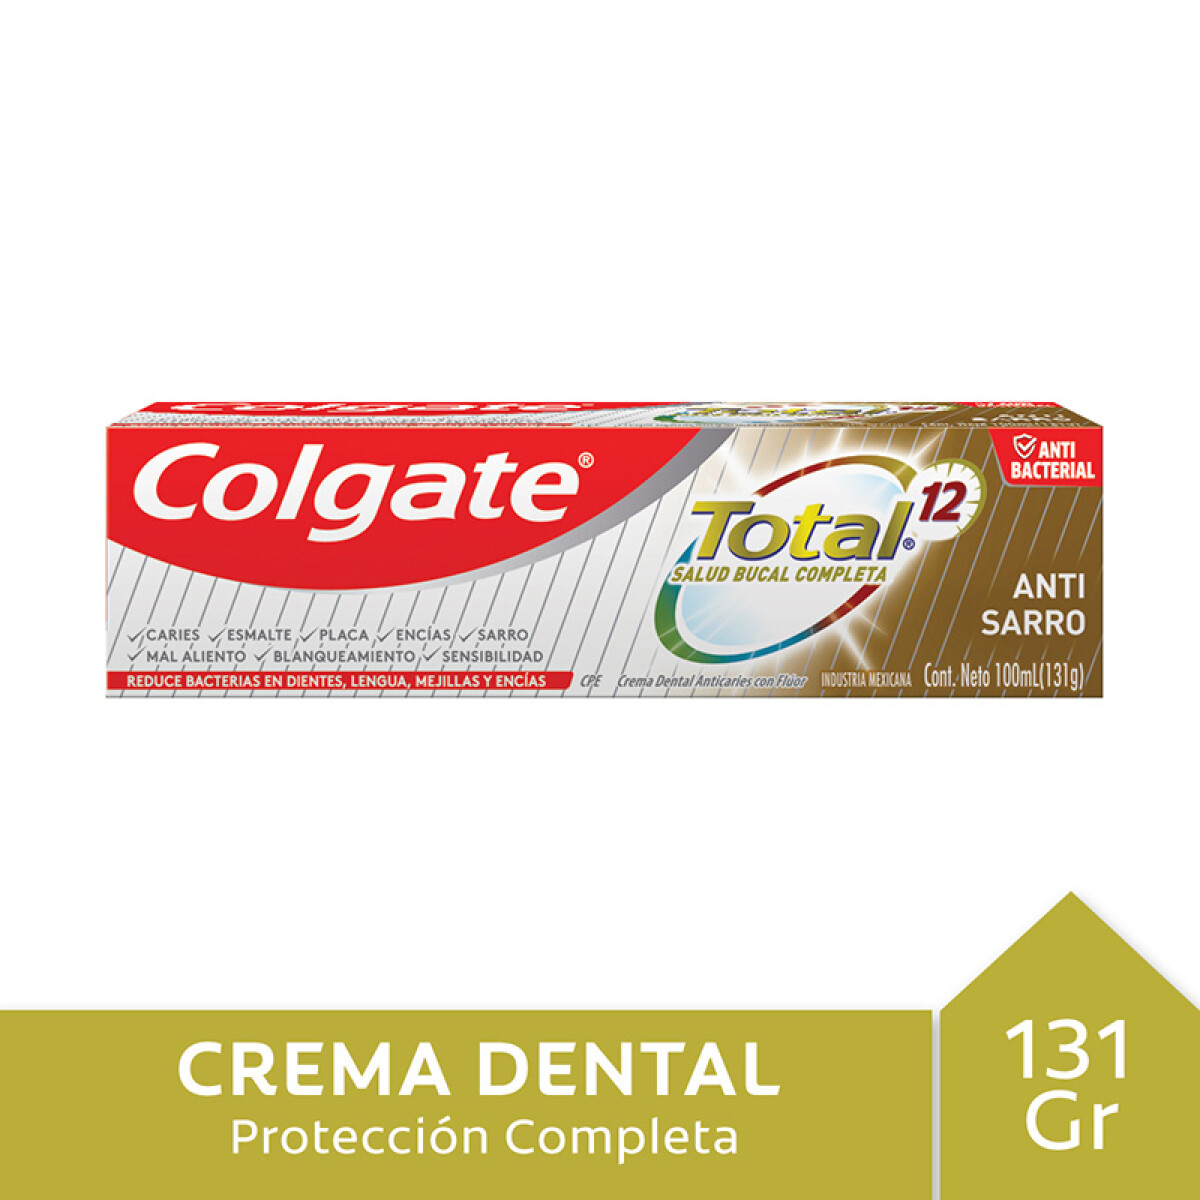 Colgate total 12 crema dental anti sarro 131 g 